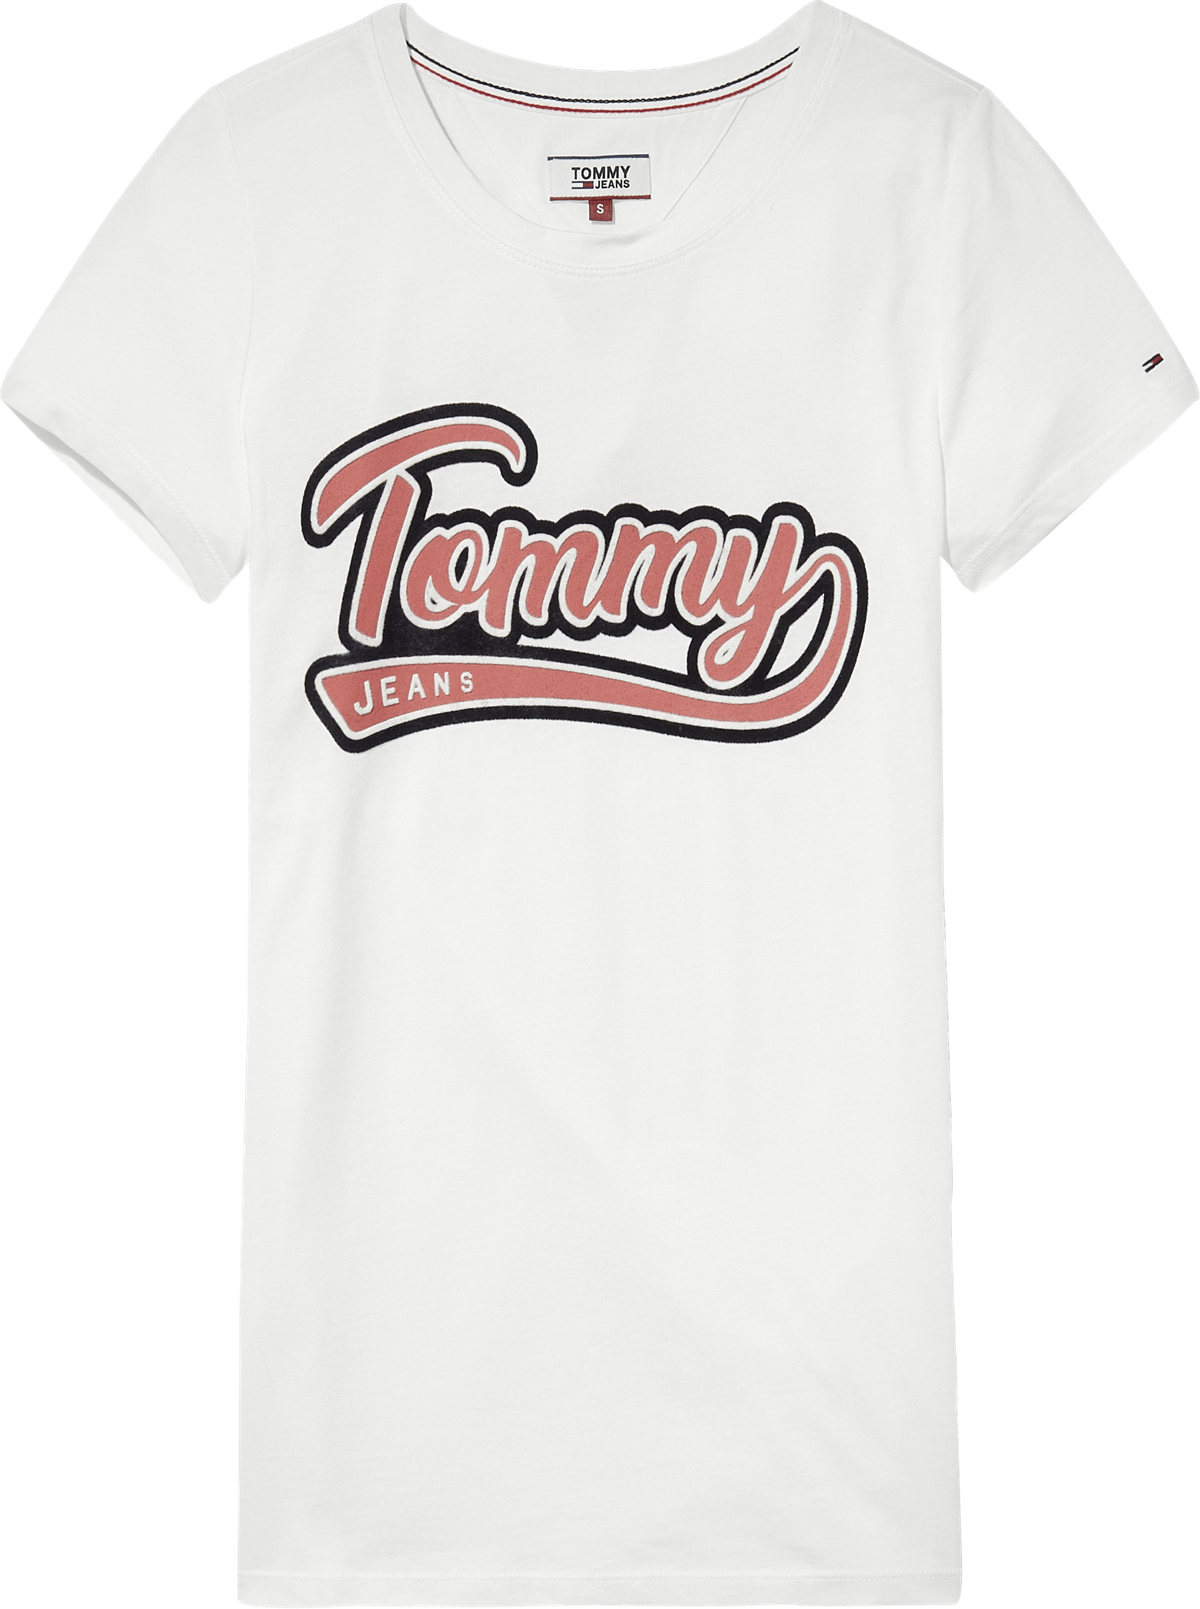 Shop T&248j Fra Tommy Hilfiger Online Her - 4 Millionaires And Paul Shirt Clipart (1200x1609), Png Download